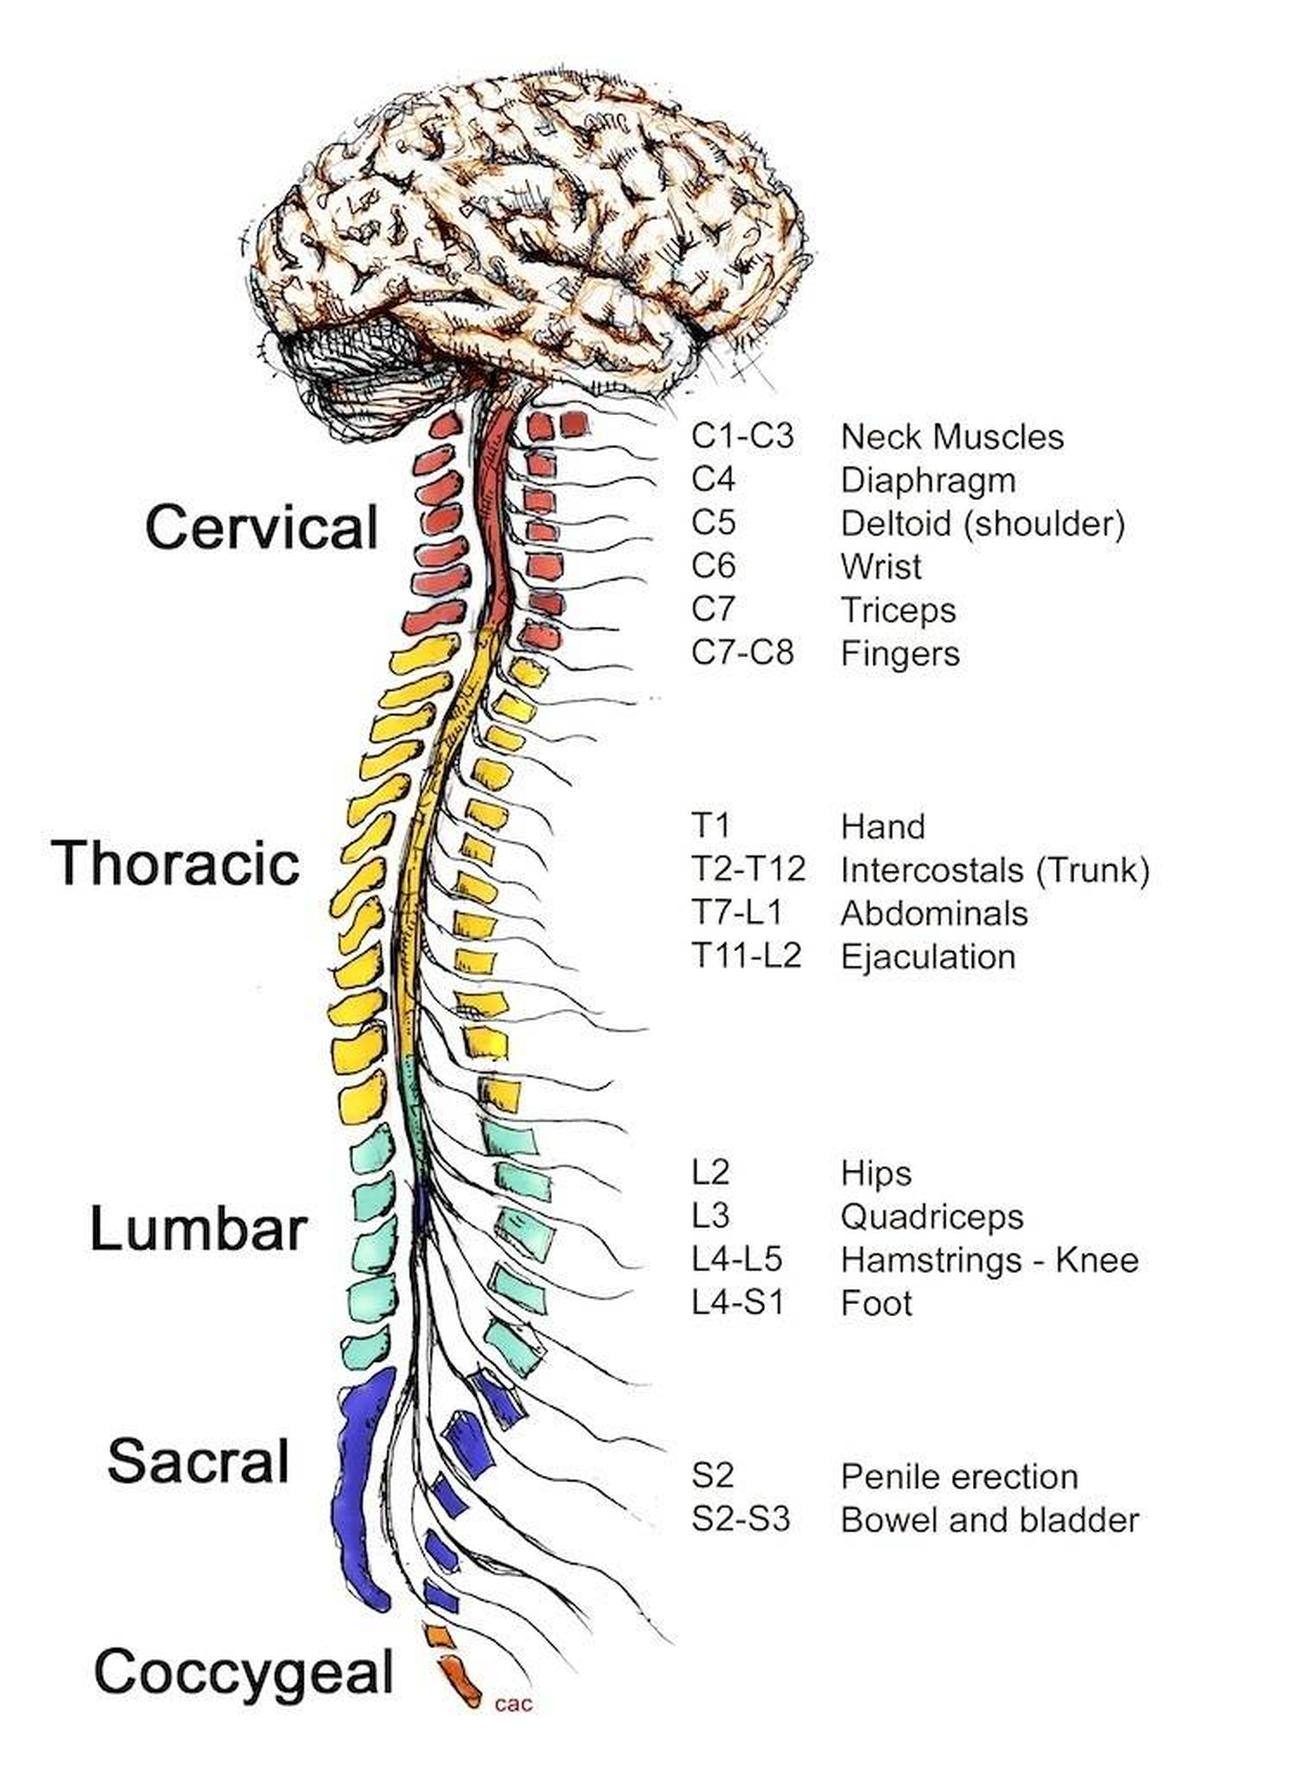 The Central nervous system